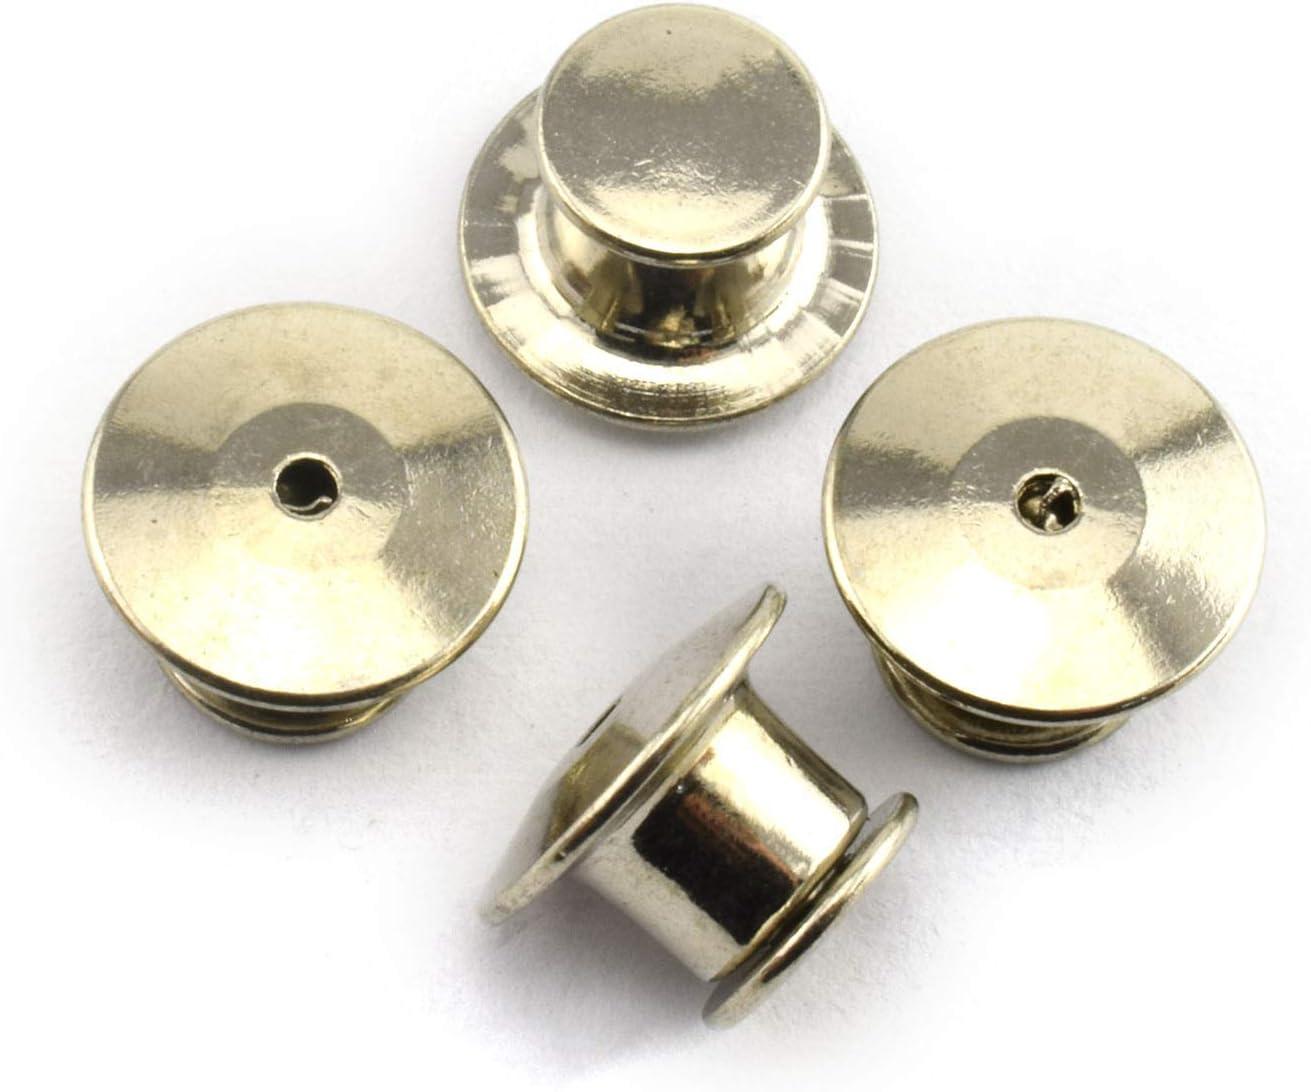 10/100 Piece Pin Keepers Vest Brass Pins Locking Pin Backs Savers